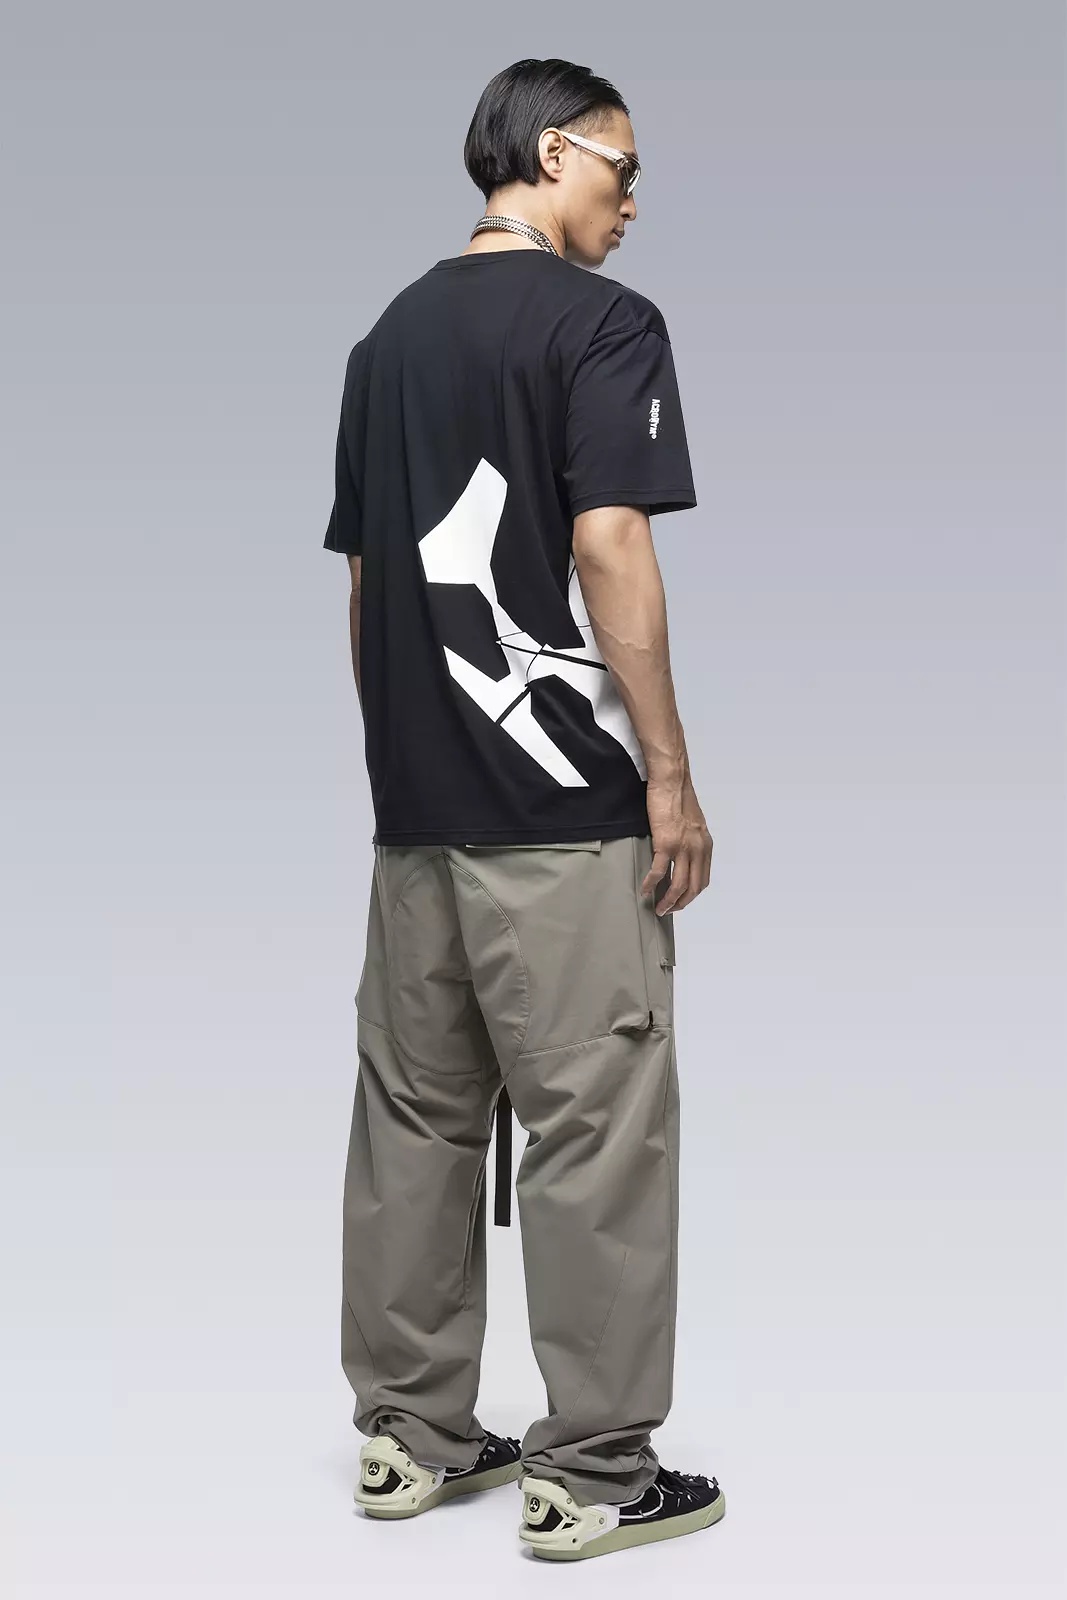 S24-PR-C Pima Cotton Short Sleeve T-shirt Black - 10